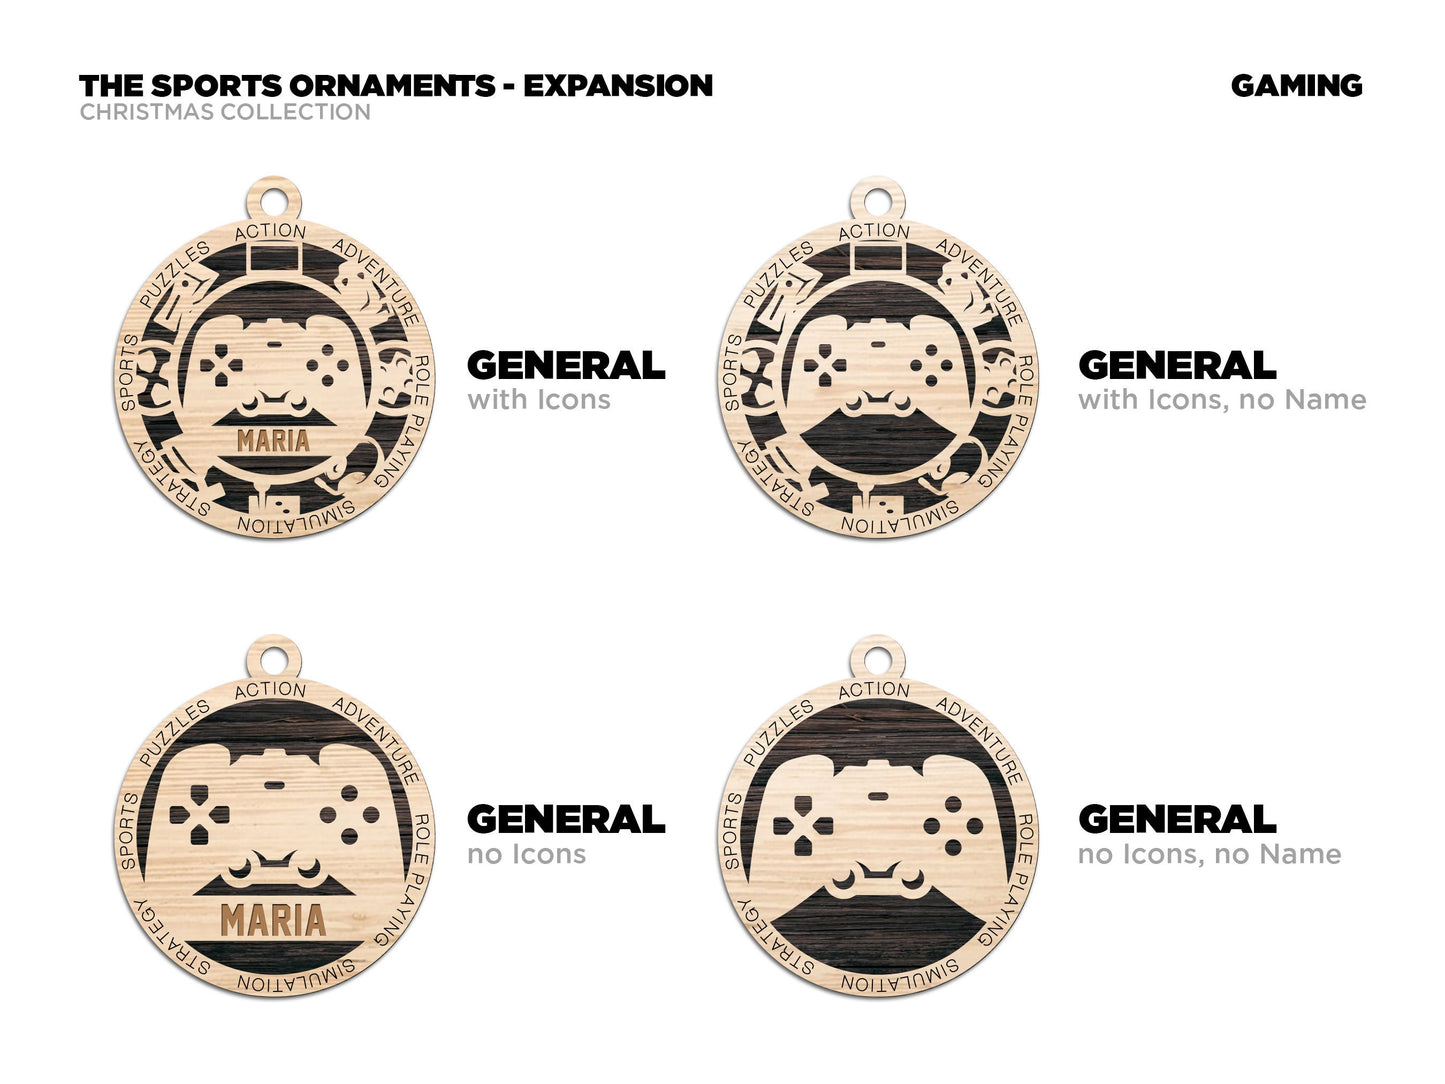 Gaming - Stadium Series Ornaments - 2 Unique designs - SVG, PDF, AI File Download - Sized for Glowforge